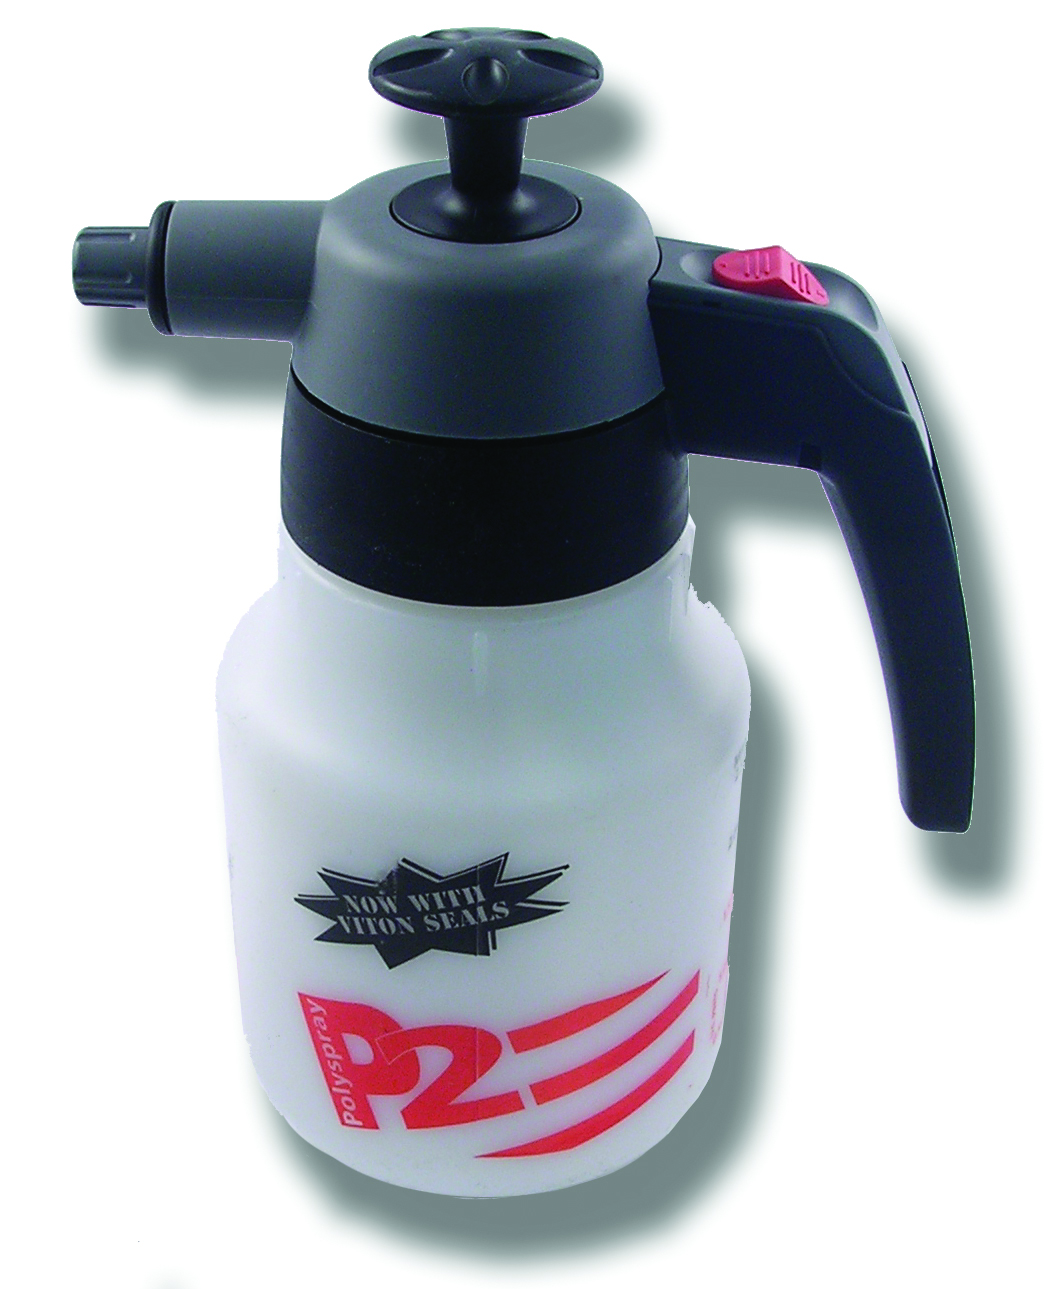 Polyspray 2 pressurized sprayer - Remove filter for Gel - The Film Shop